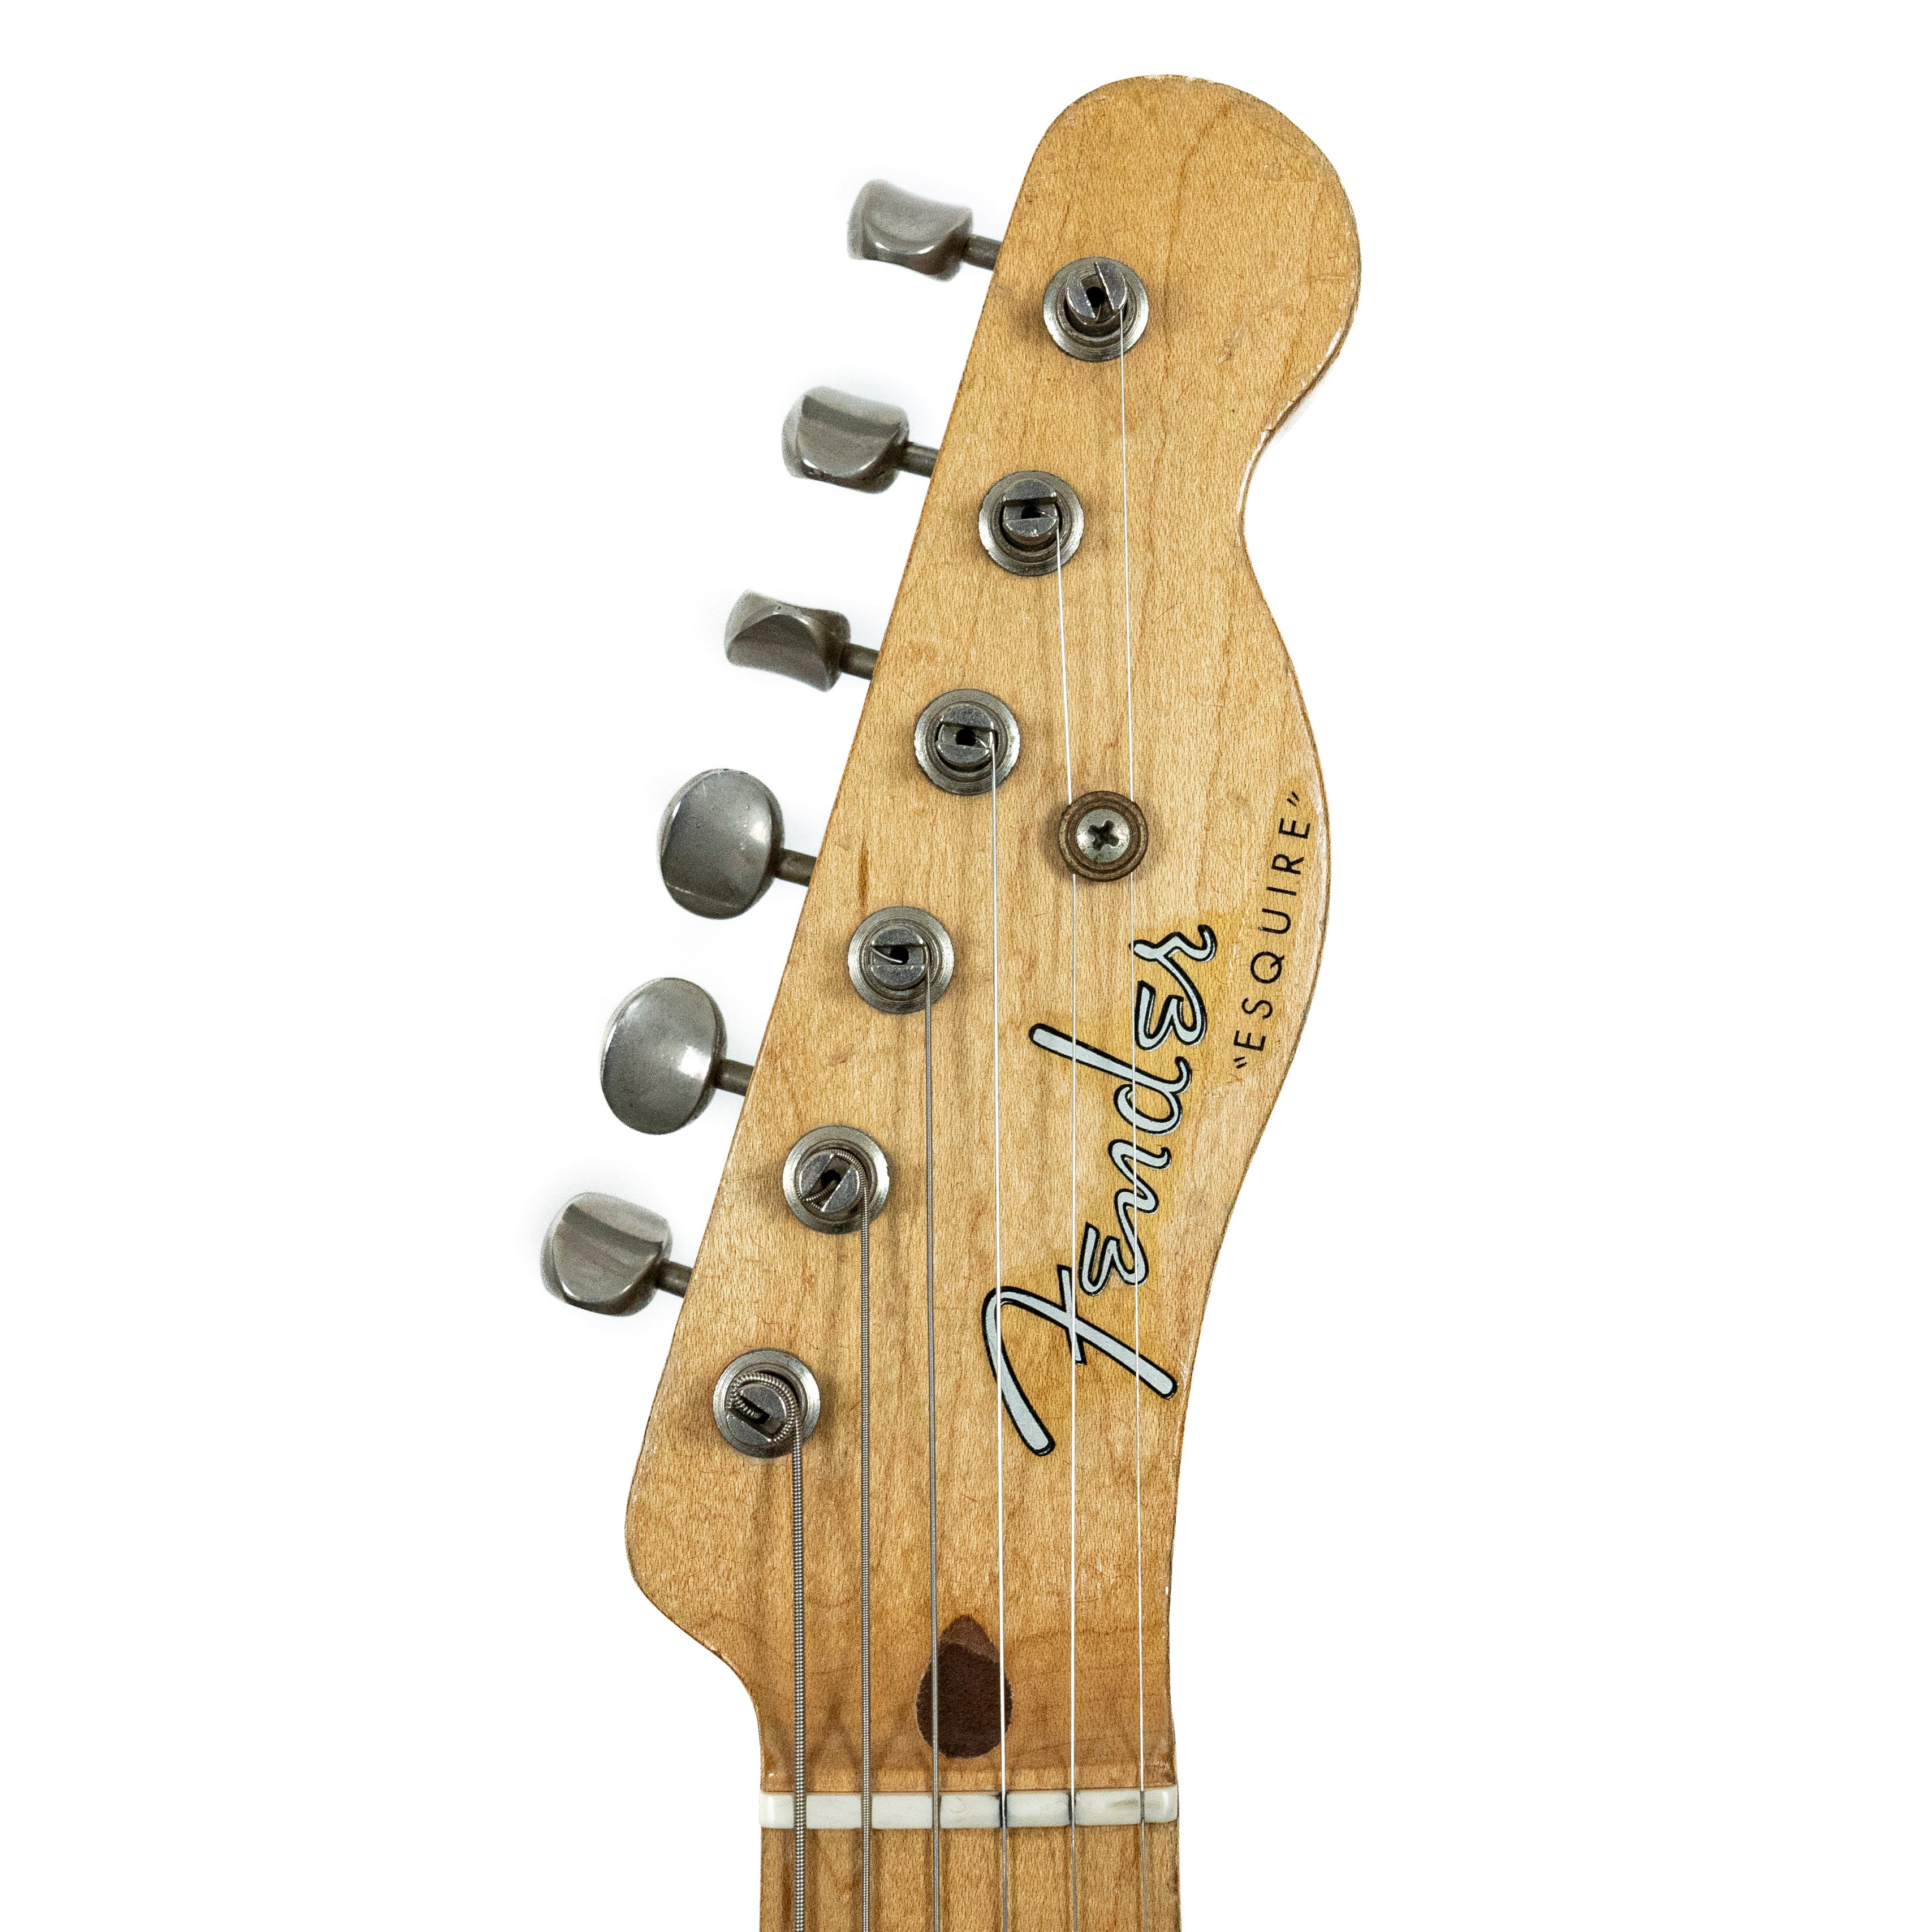 Fender 1955 Esquire, Custom Green